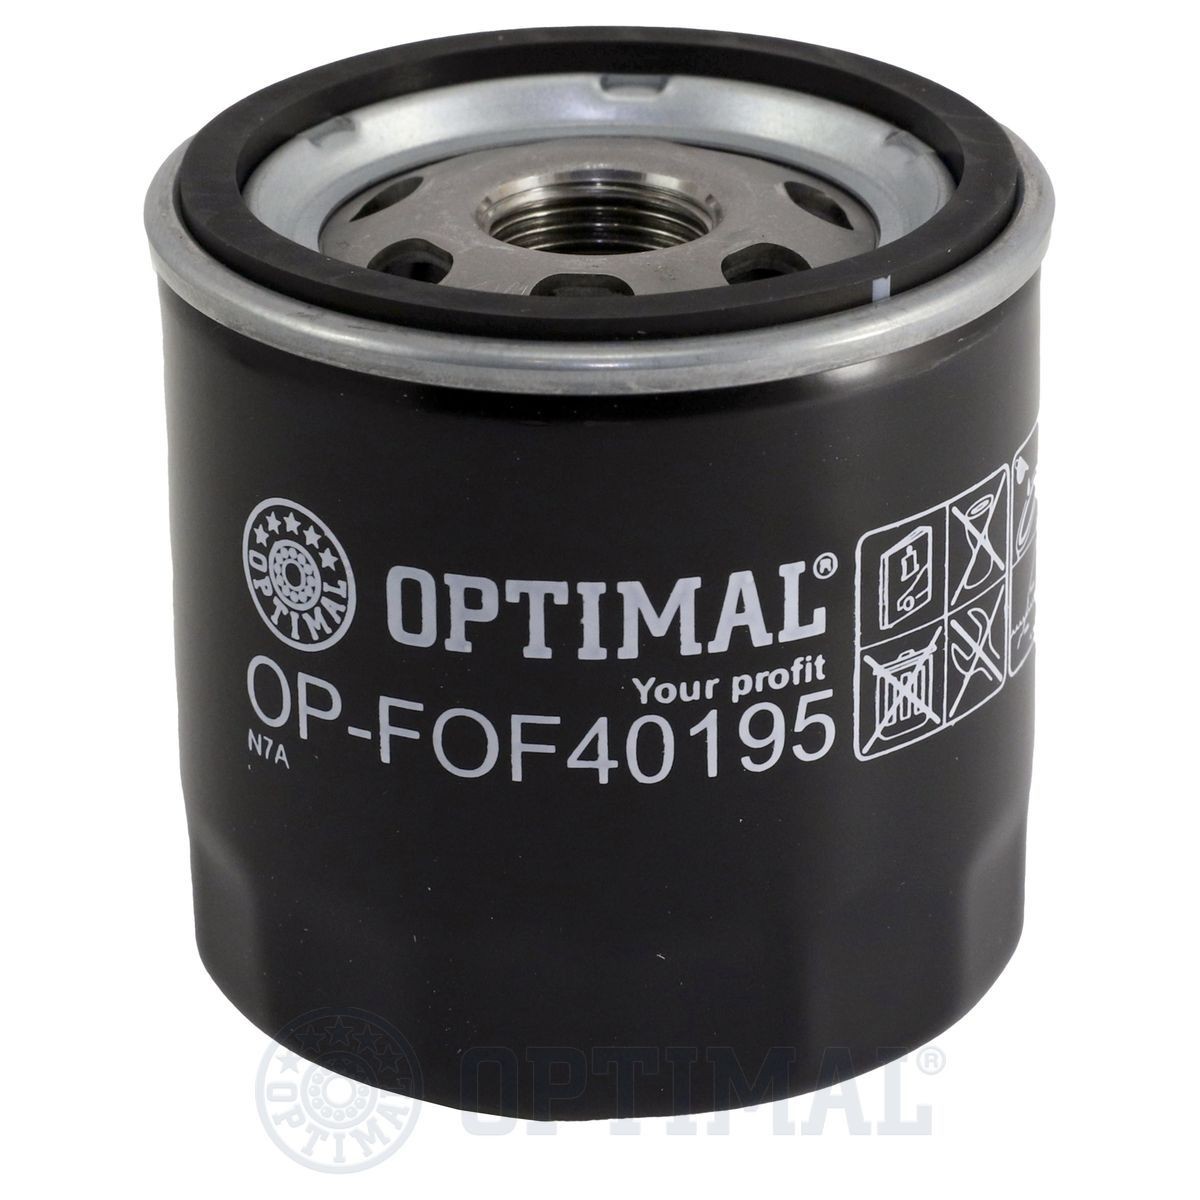 OPTIMAL OP-FOF40195 Oil filter ED0021751040-S